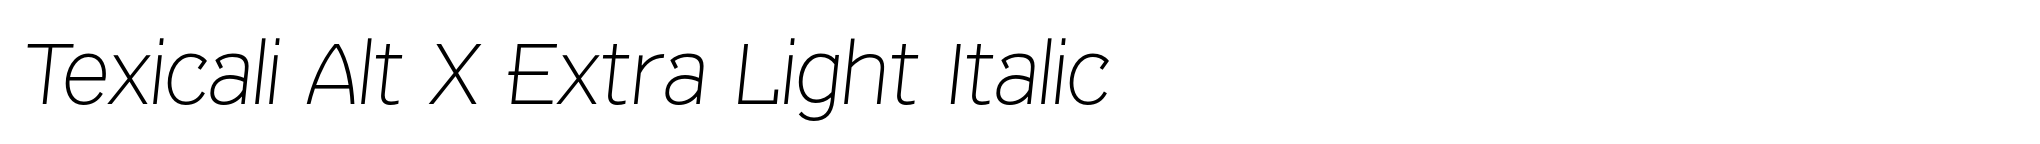 Texicali Alt X Extra Light Italic image